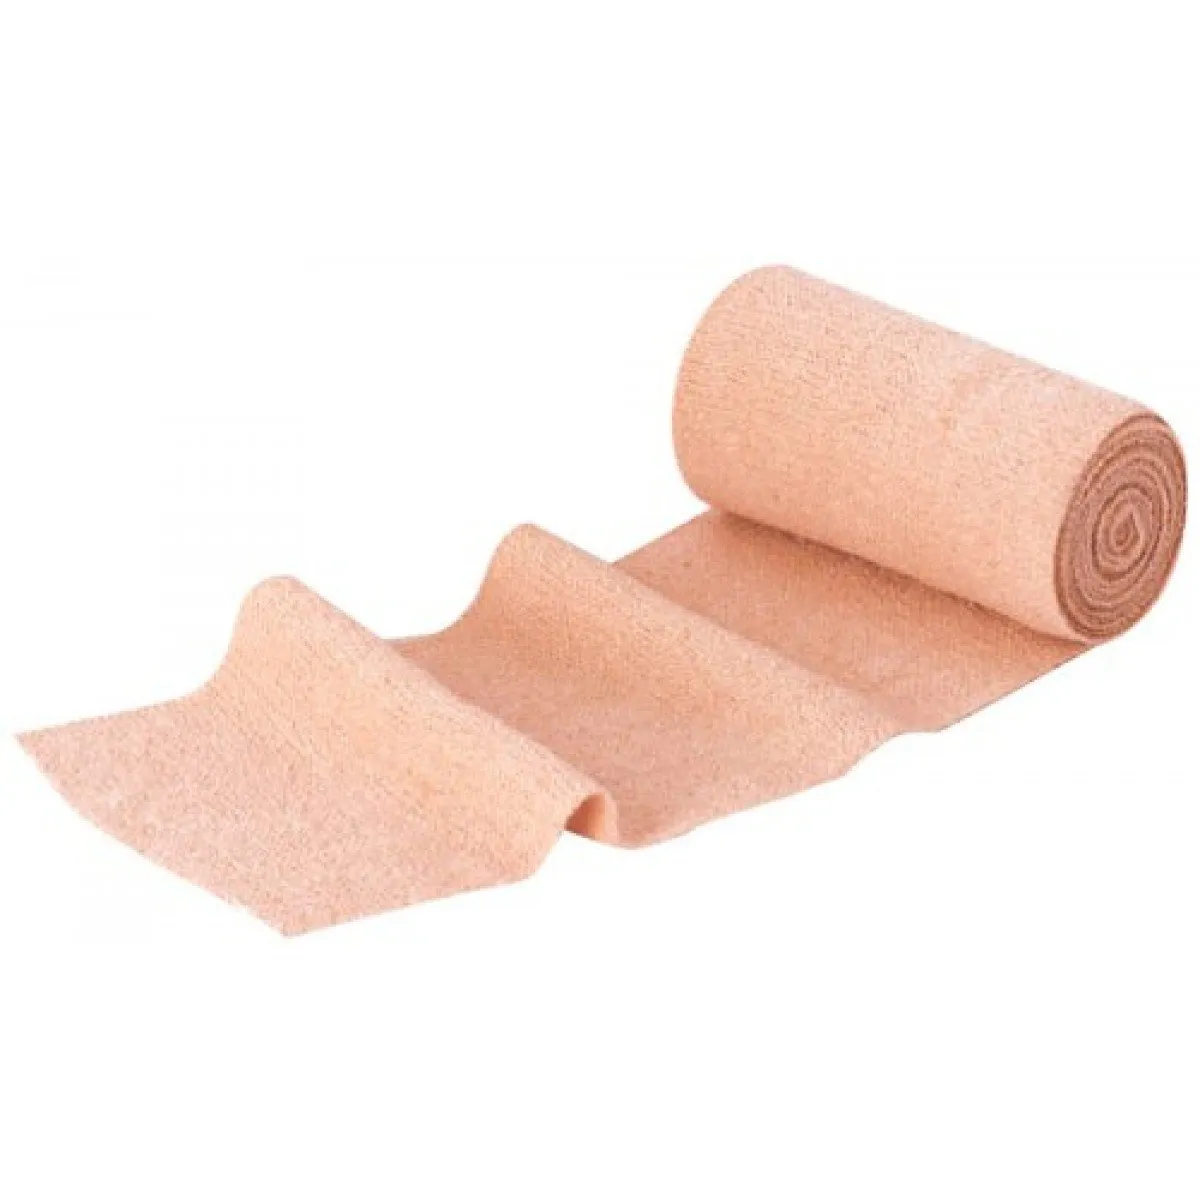 Datt Medi Velsoft-I Elastic Cotton Crepe Bandage 8 cm x 4.5 m